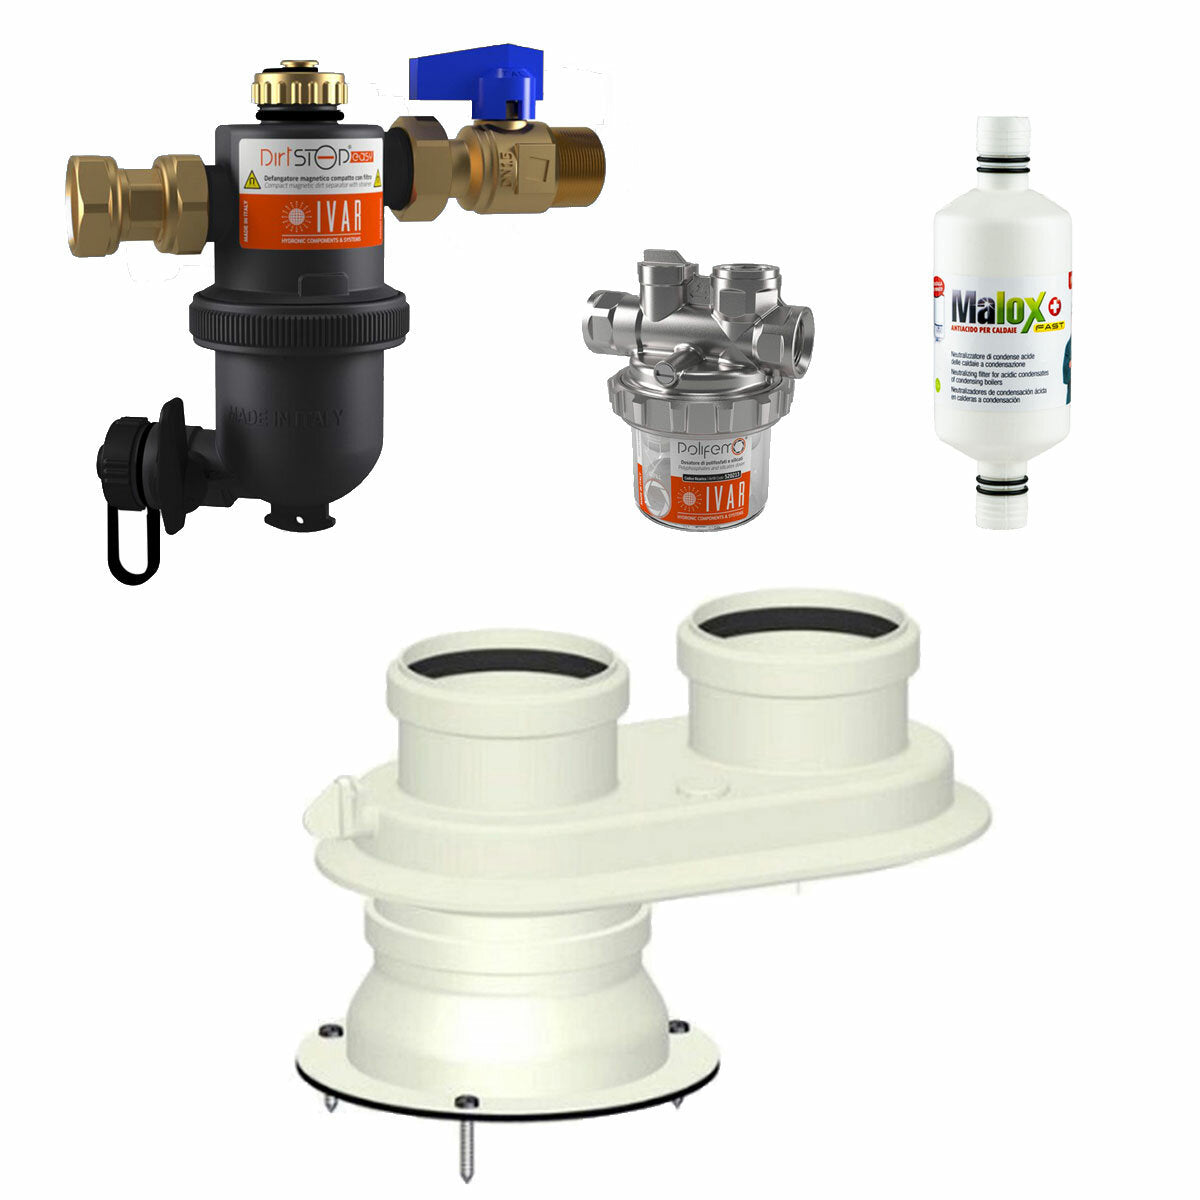 Bosch boiler installation kit with dirt separator - polyphosphate dispenser - condensate neutraliser - double flue gas outlet